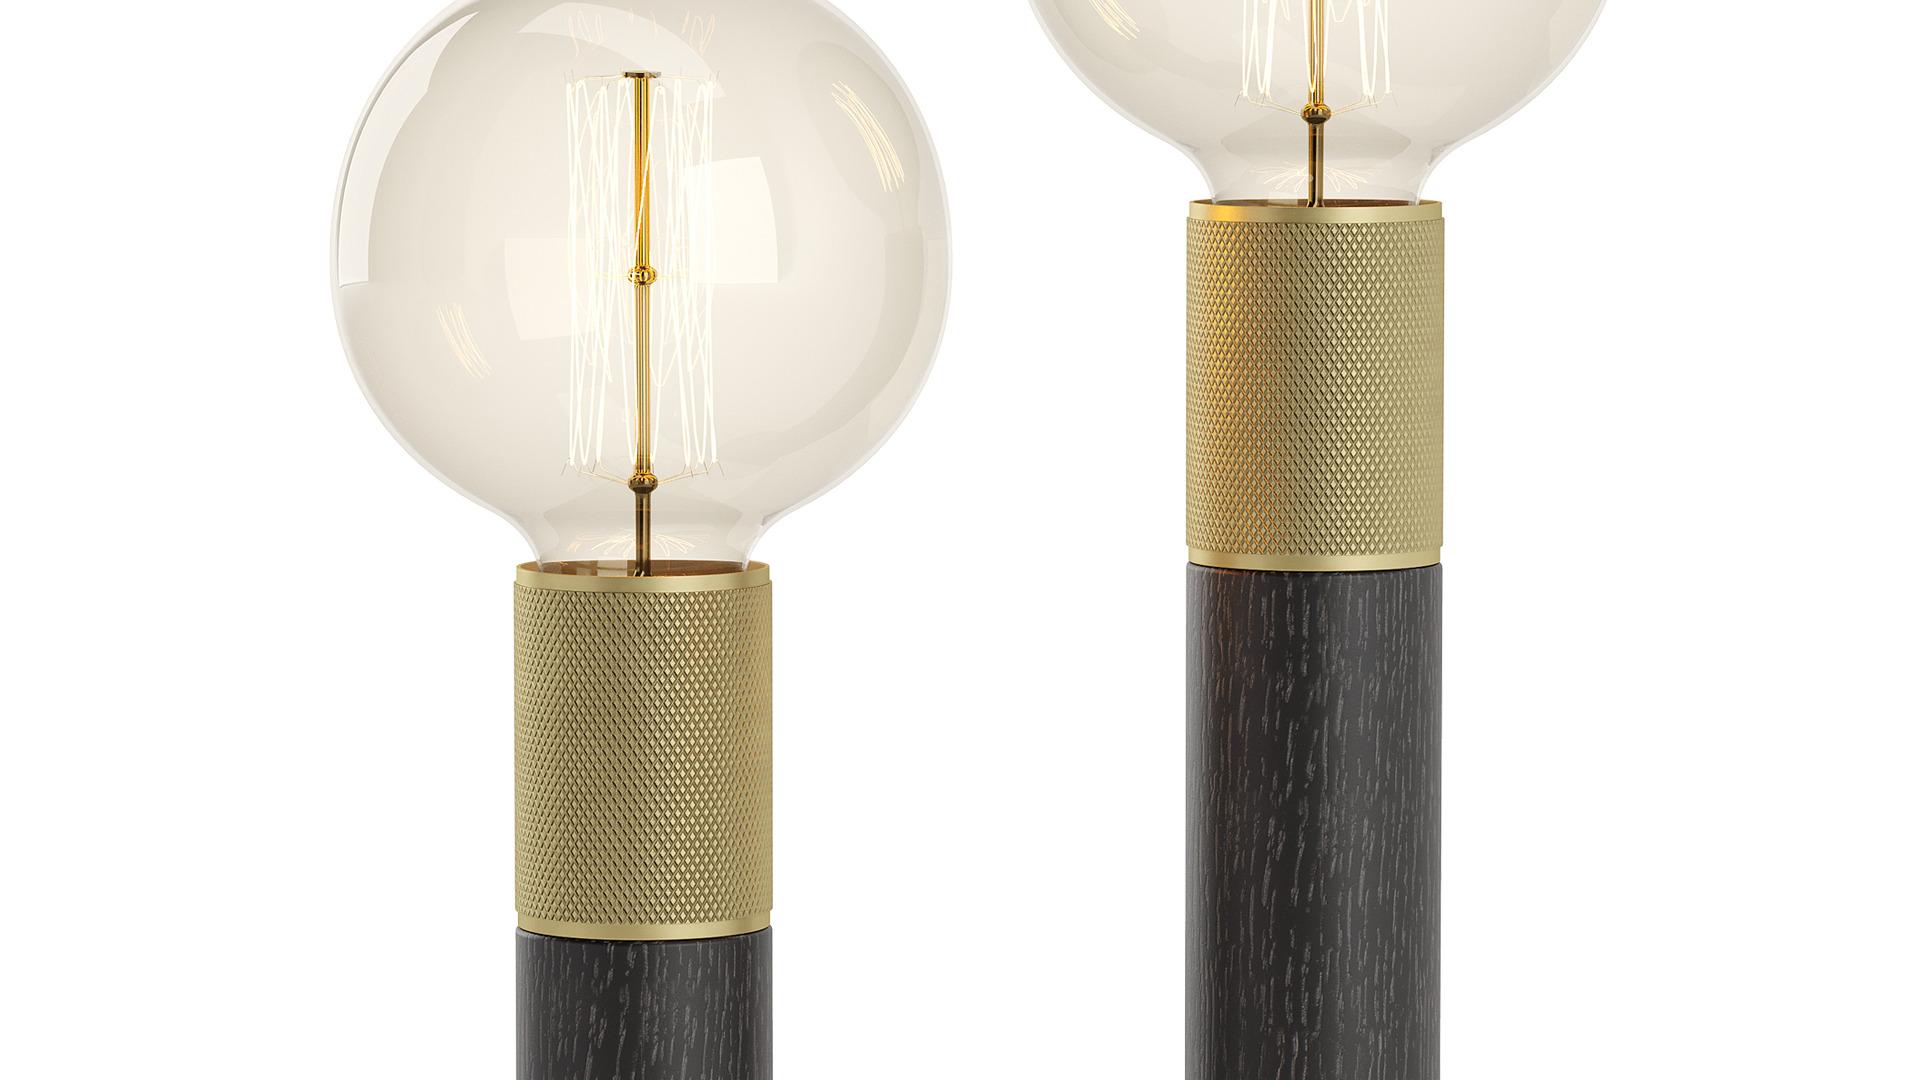 Aspen-Tischlampe „Big“ (Moderne) im Angebot